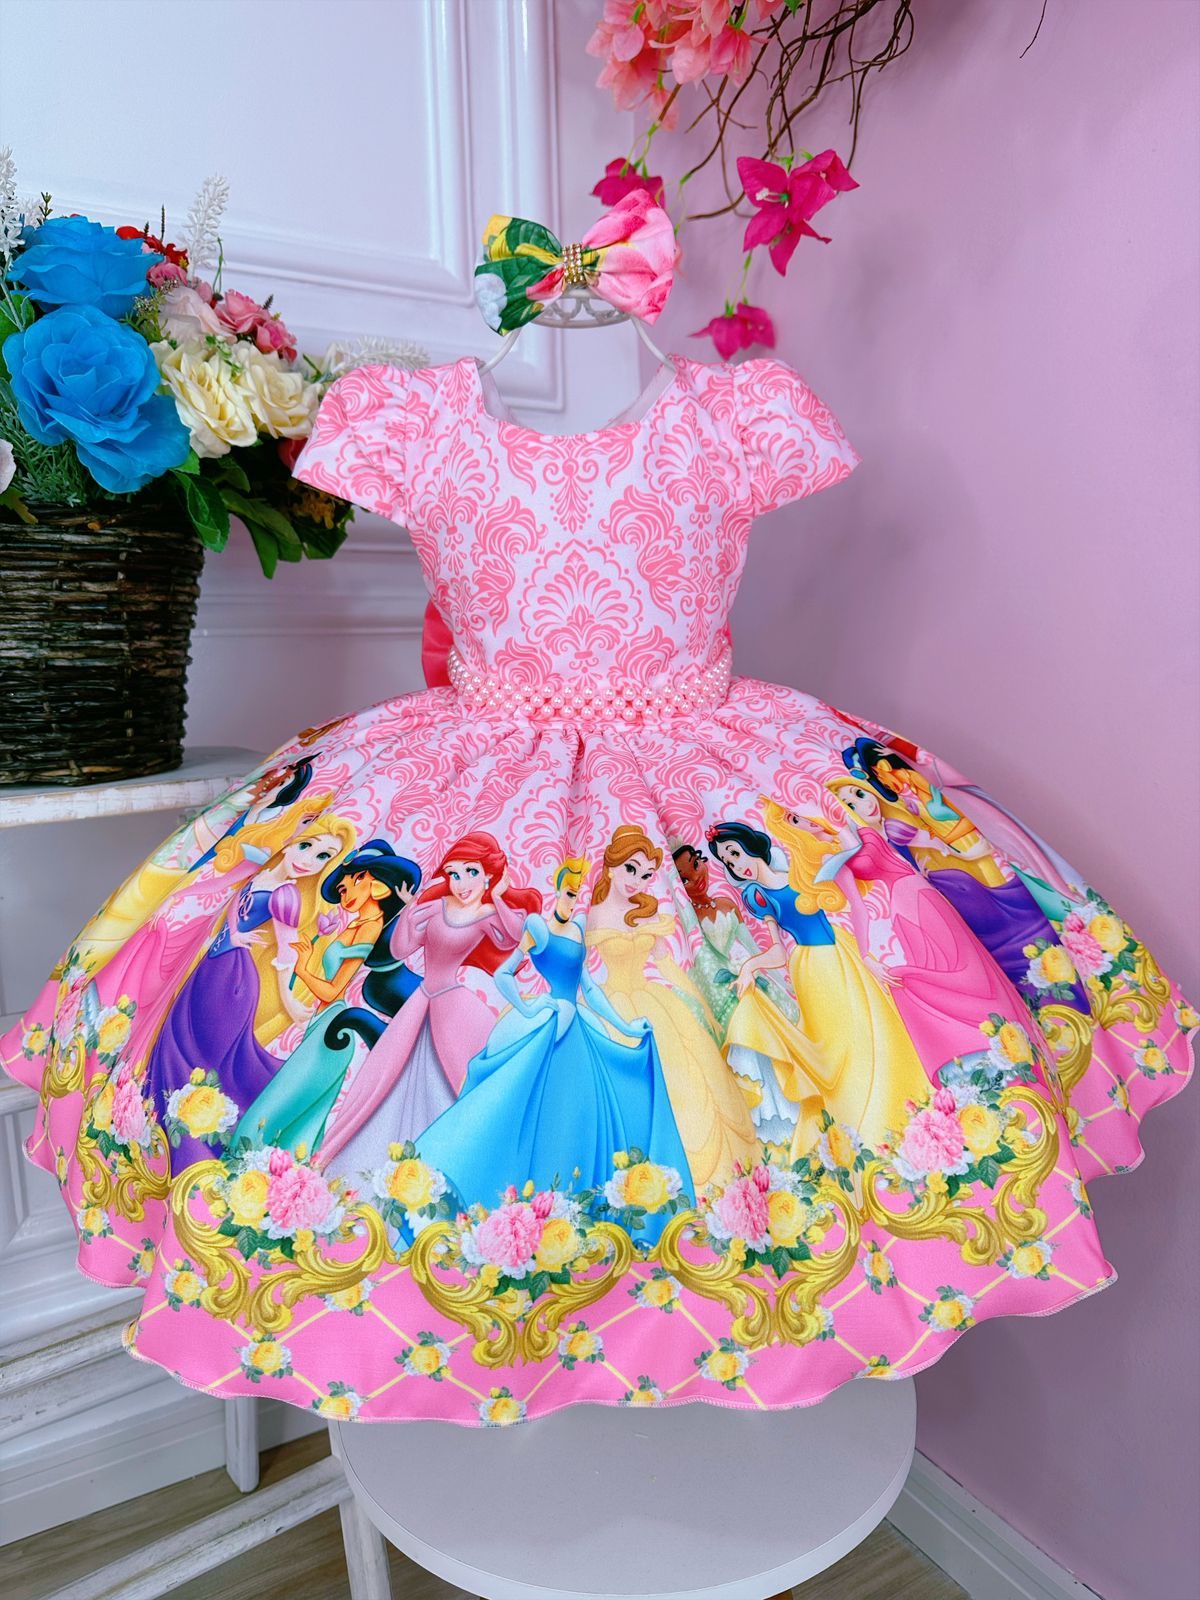 Vestido Infantil Barbie Rosa Aplique Laço - Fabuloso Ateliê